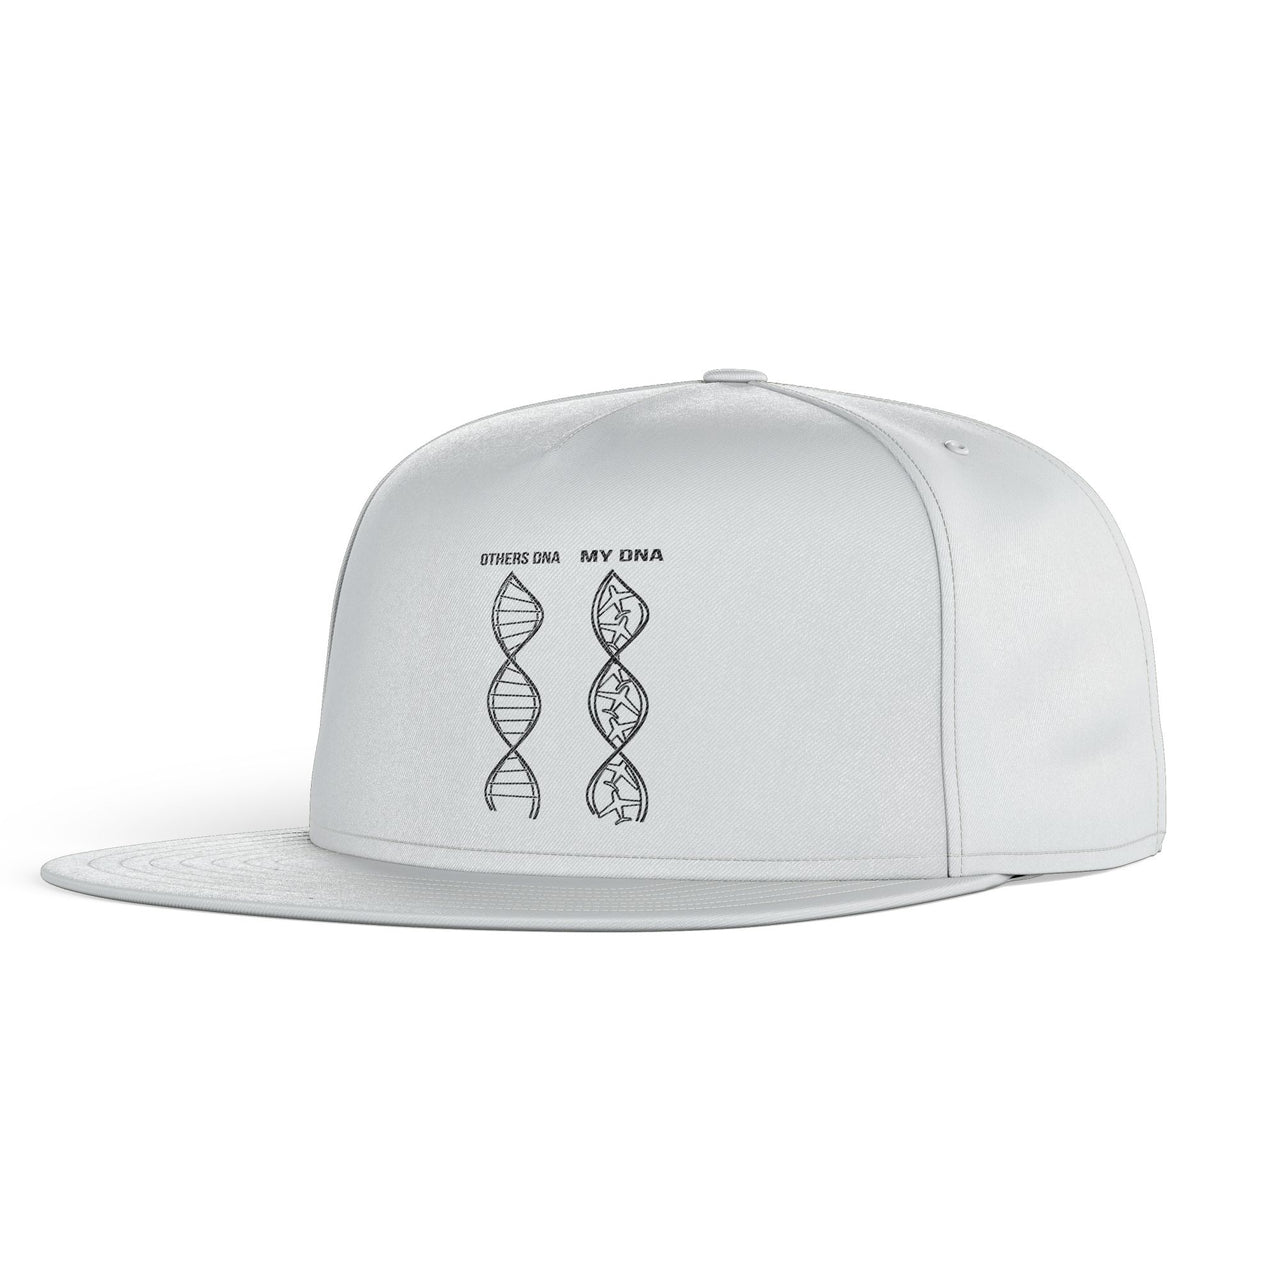 Aviation DNA Designed Snapback Caps & Hats